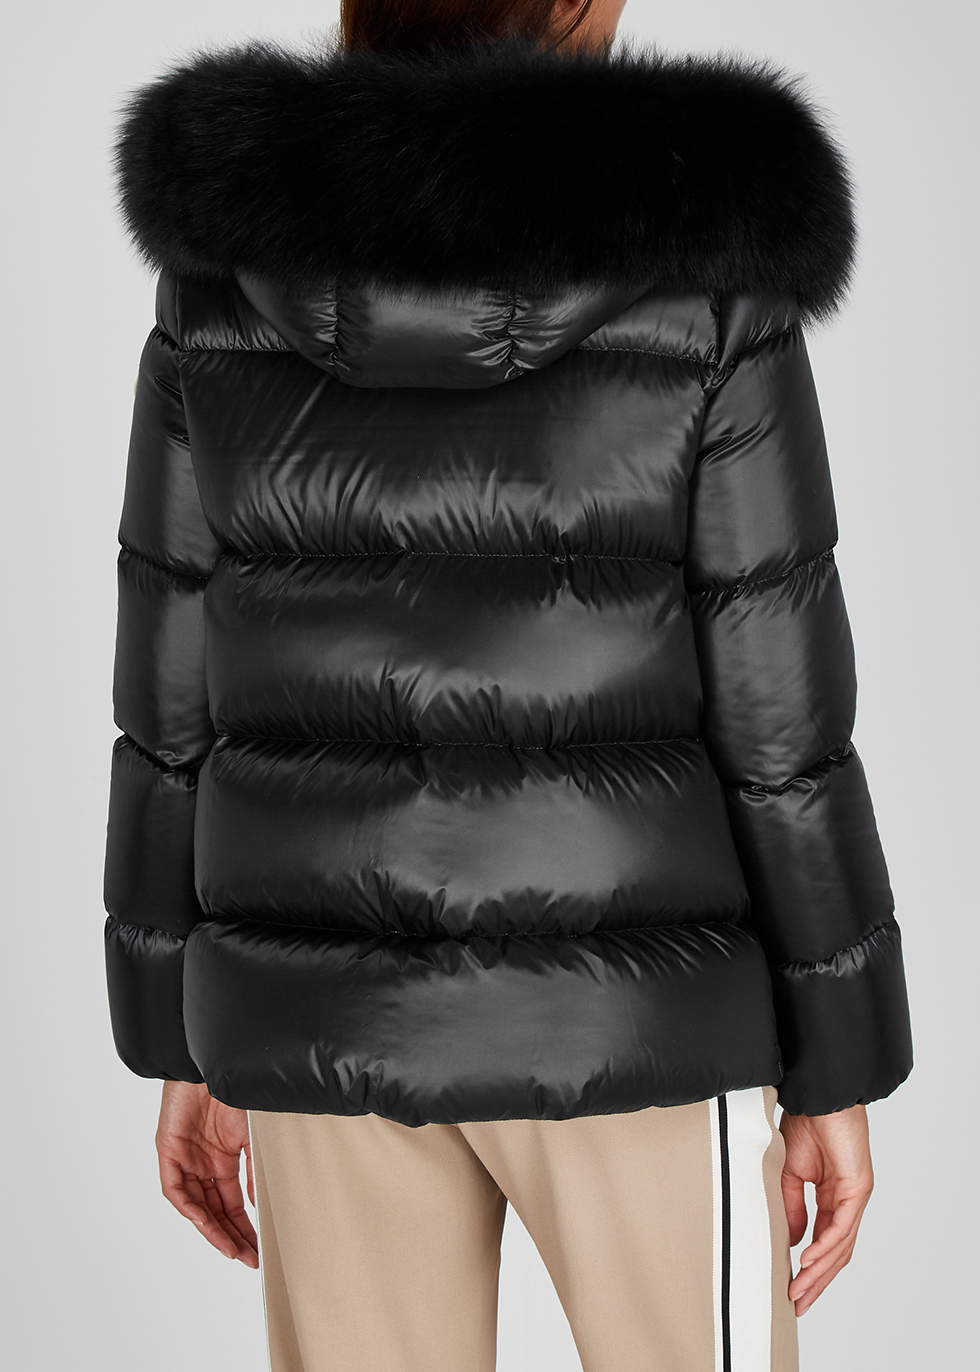 moncler fur jacket